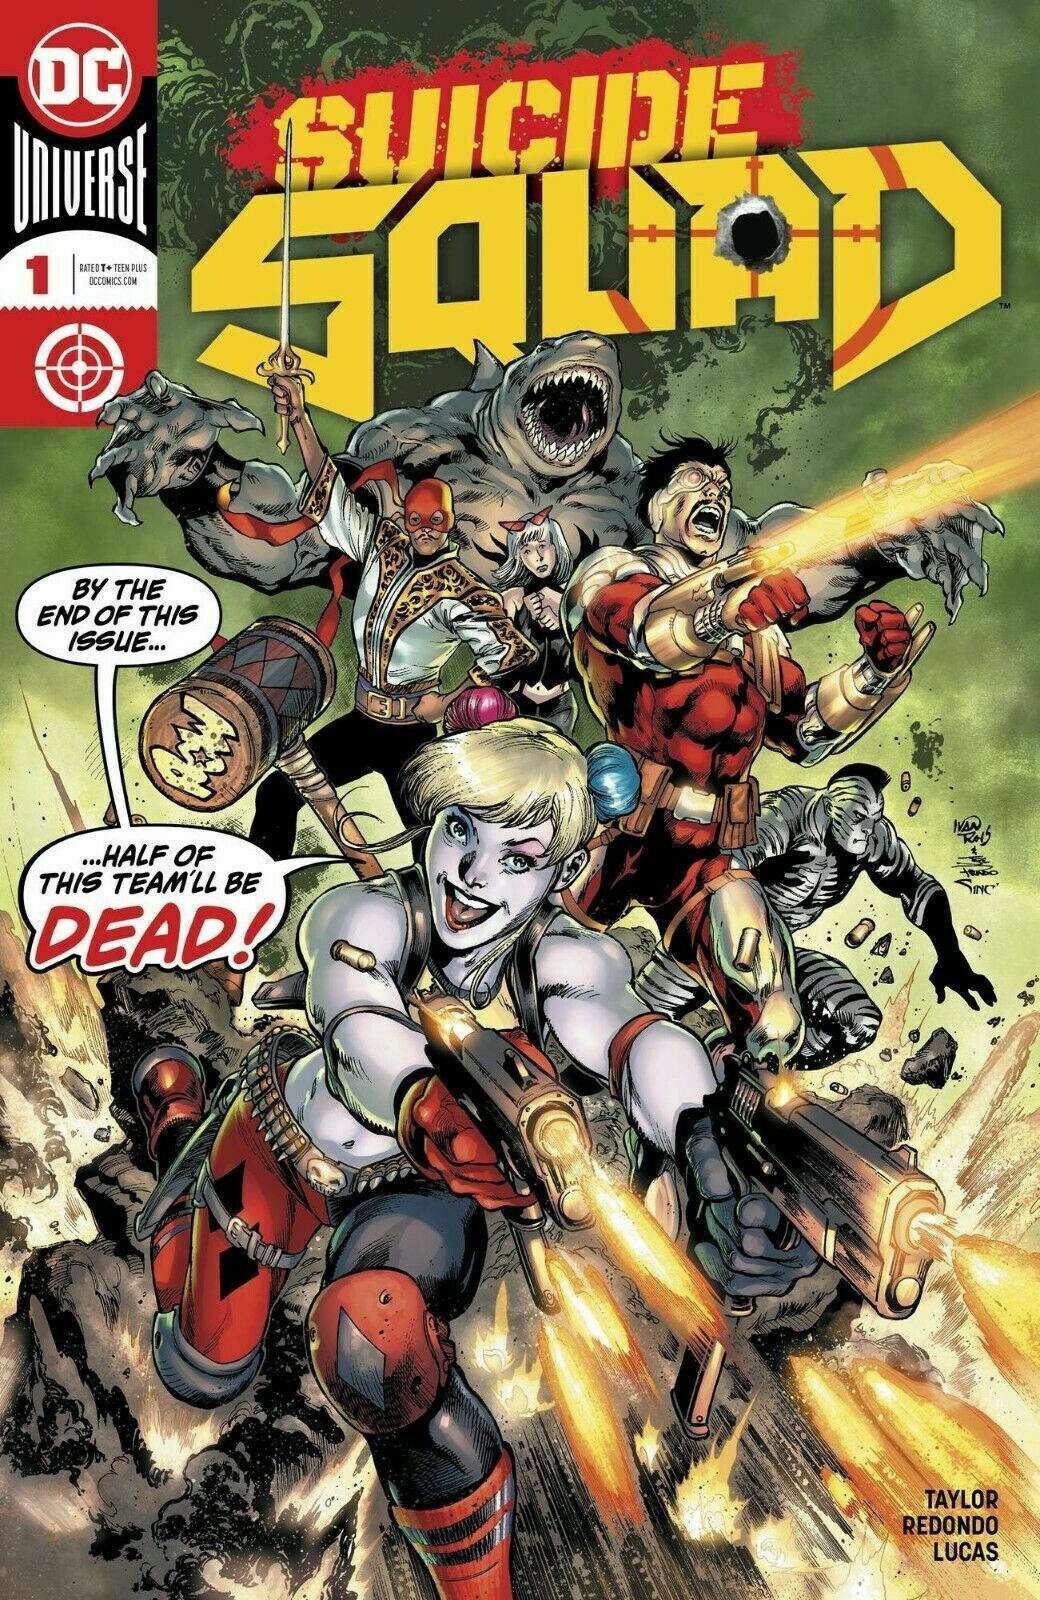 Suicide Squad #1-10 Select Main & Variants Covers DC Comics 2019-2020 NM